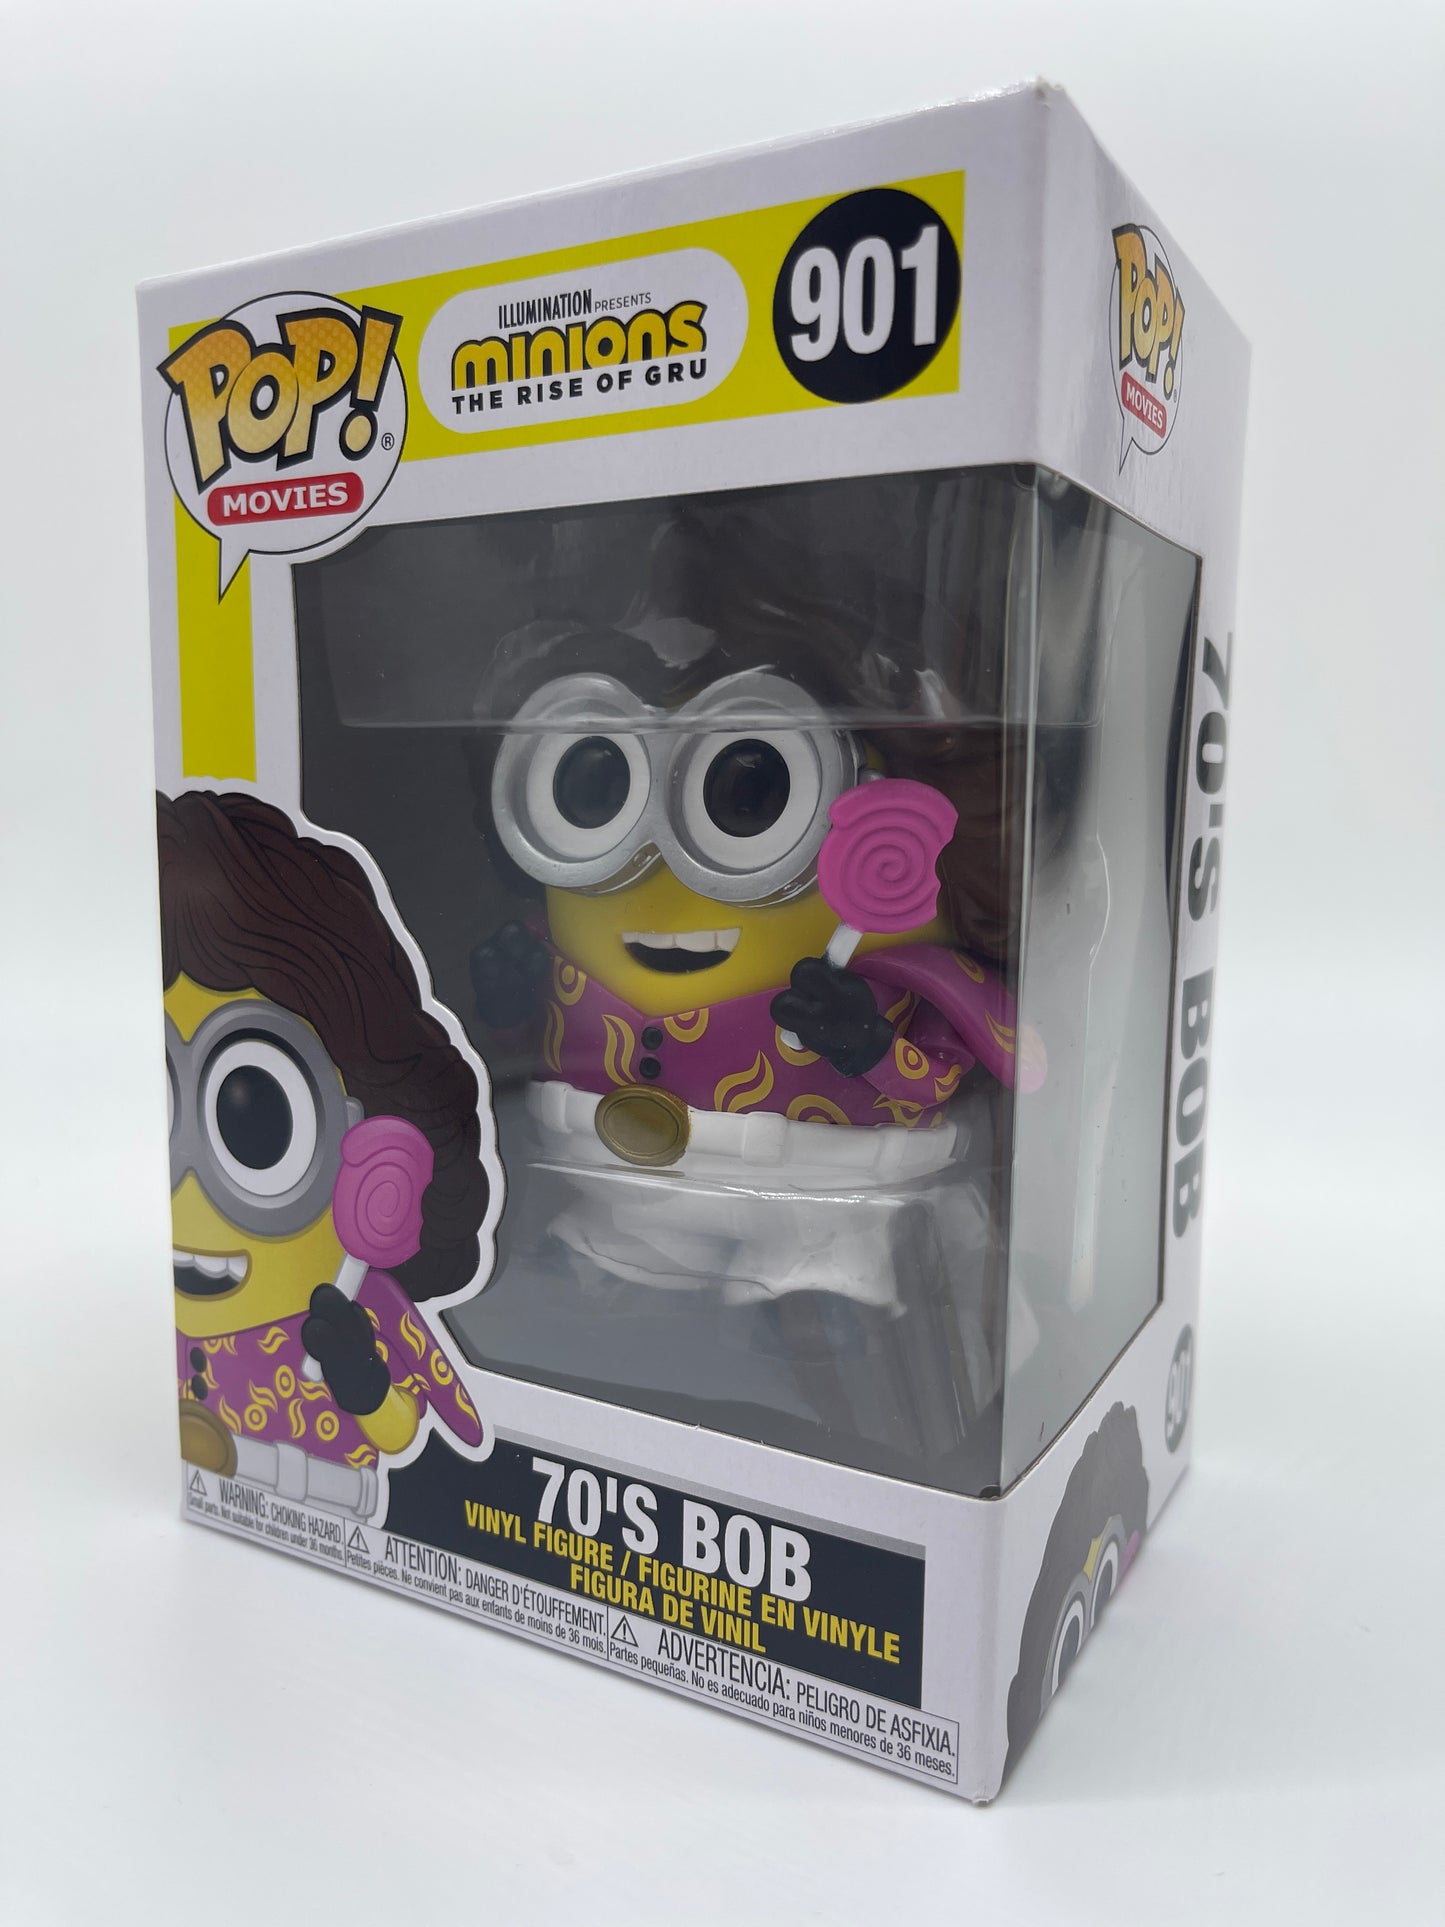 Funko Pop! Movies "70's Bob" #901 Minions Rise of Gru Universal Studios